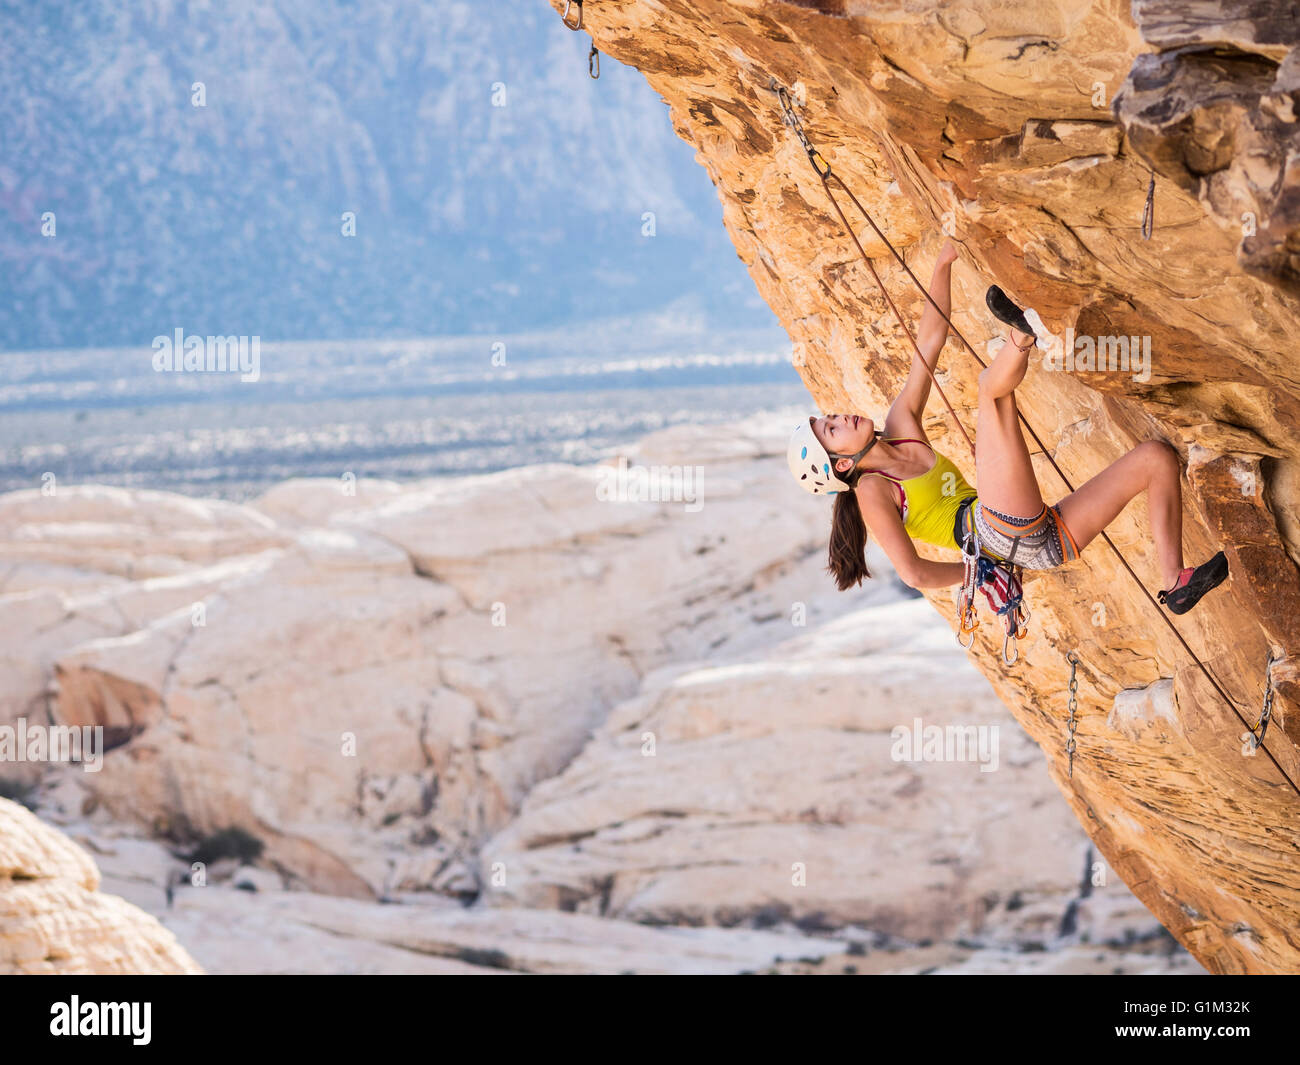 Mixed race girl rock climbing on cliff Stock Photo